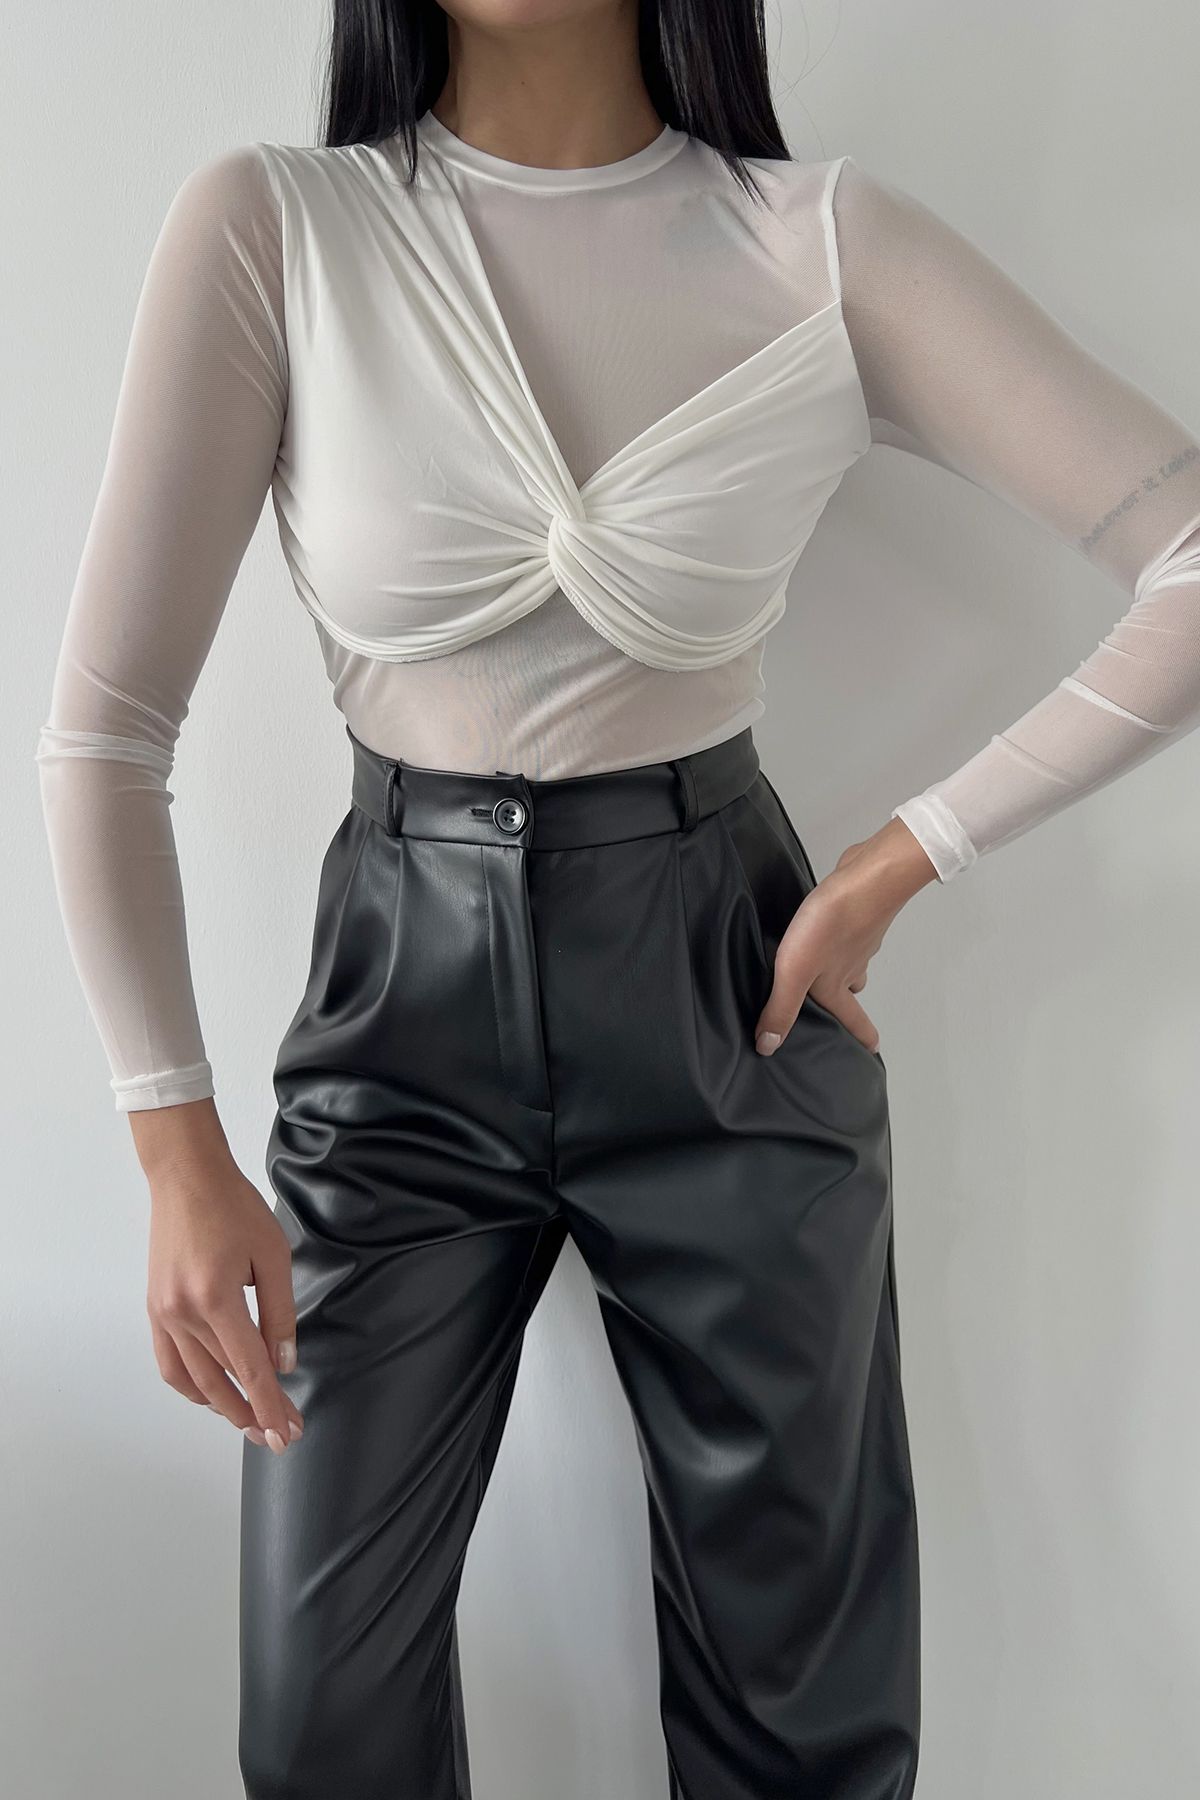 WOMAN VISION Kadın Tül Kumaş Büzgü Tasarımlı Uzun Kollu Transparan Beyaz Bluz 300